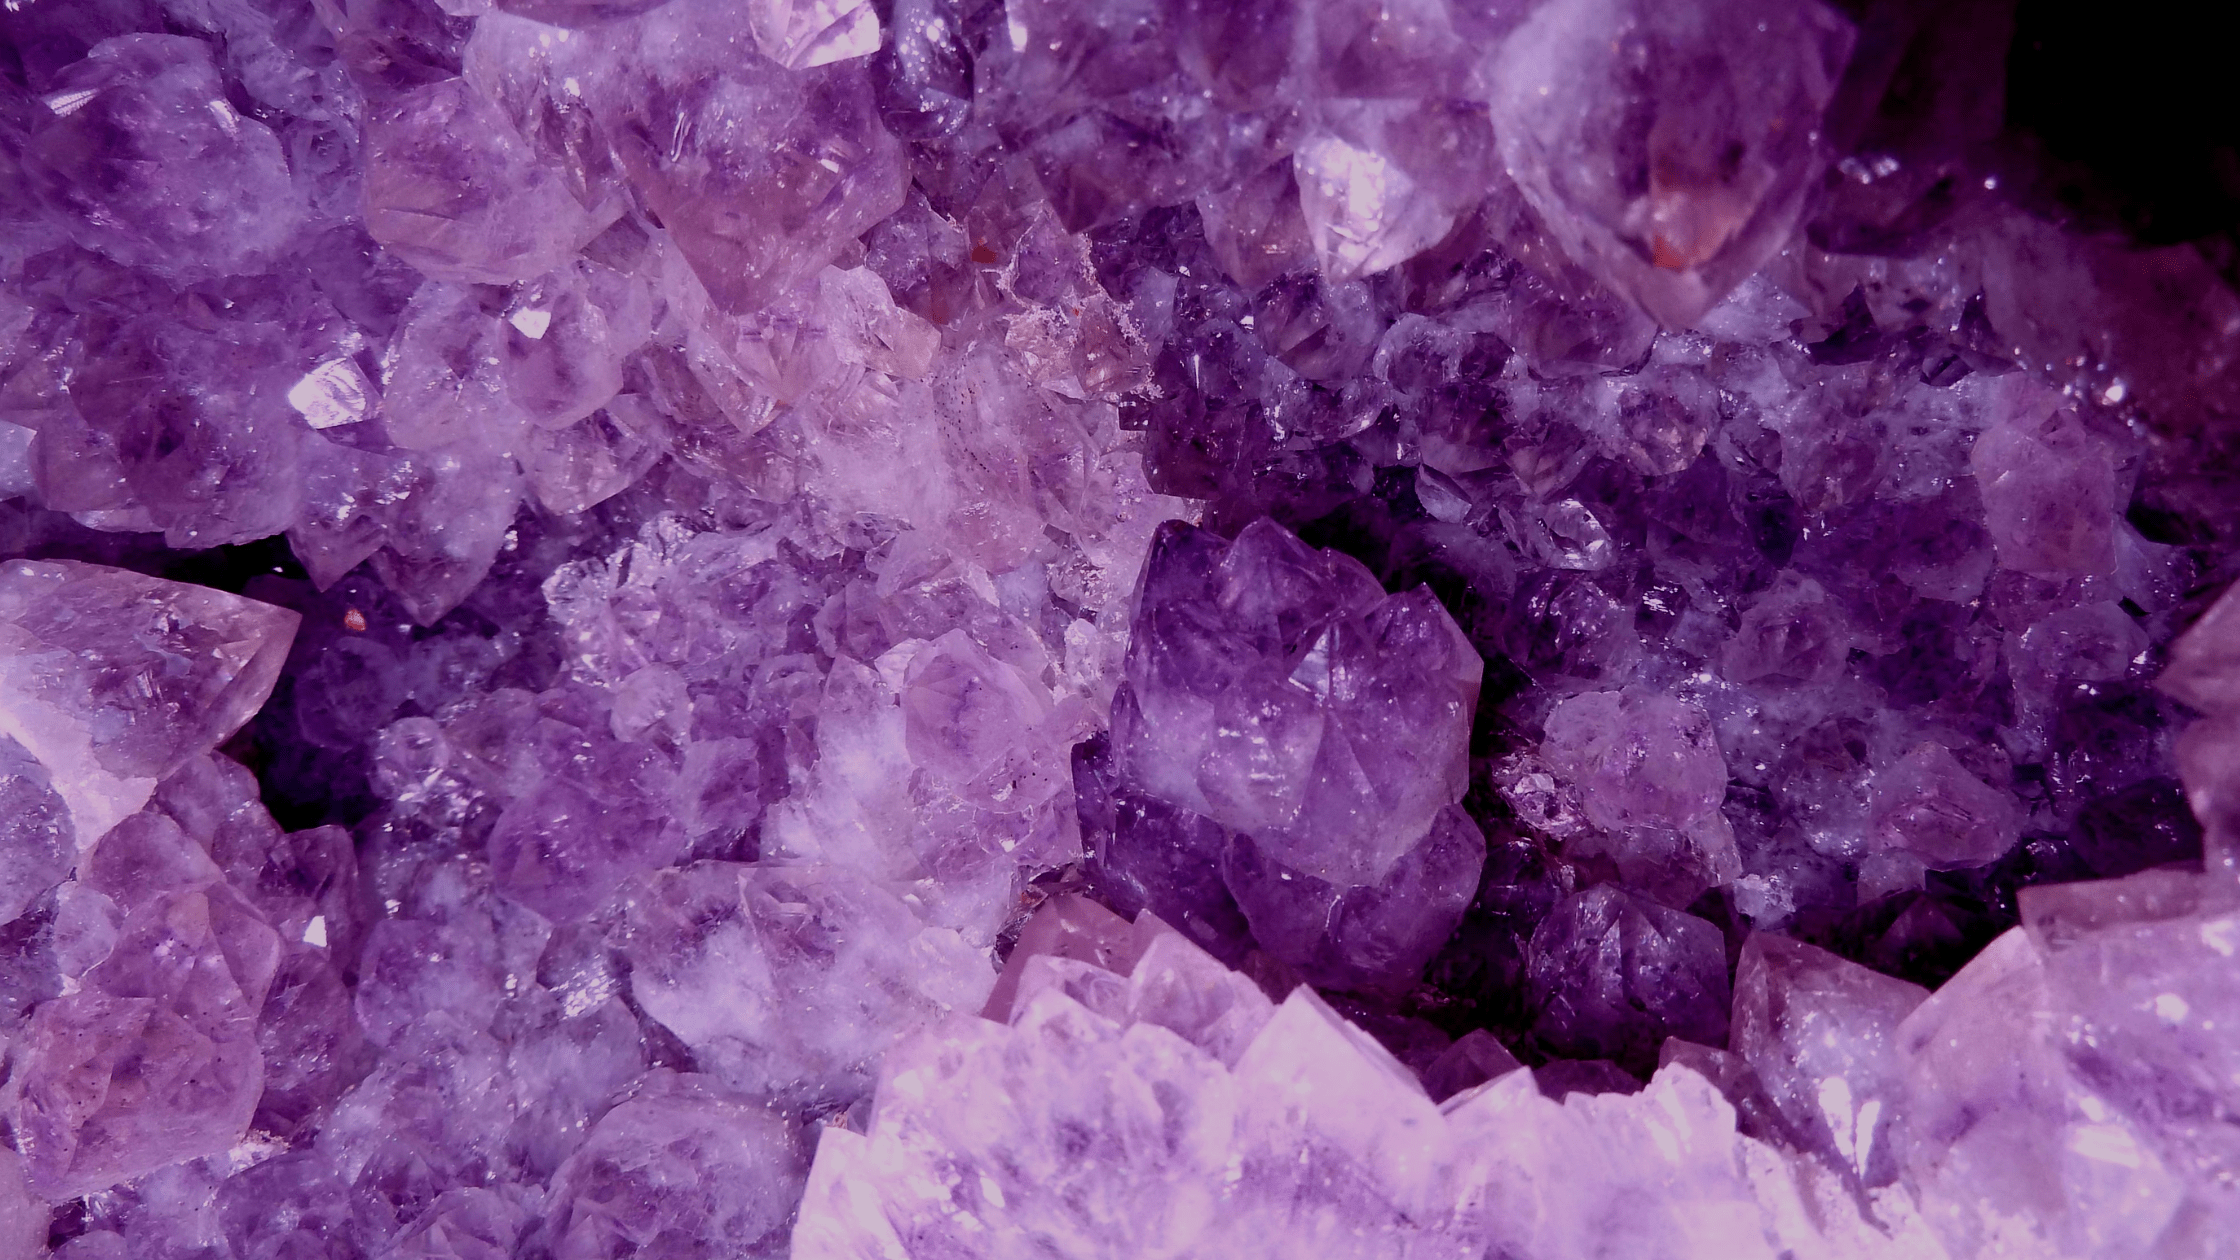 Crystal Amethyst is a healing stone